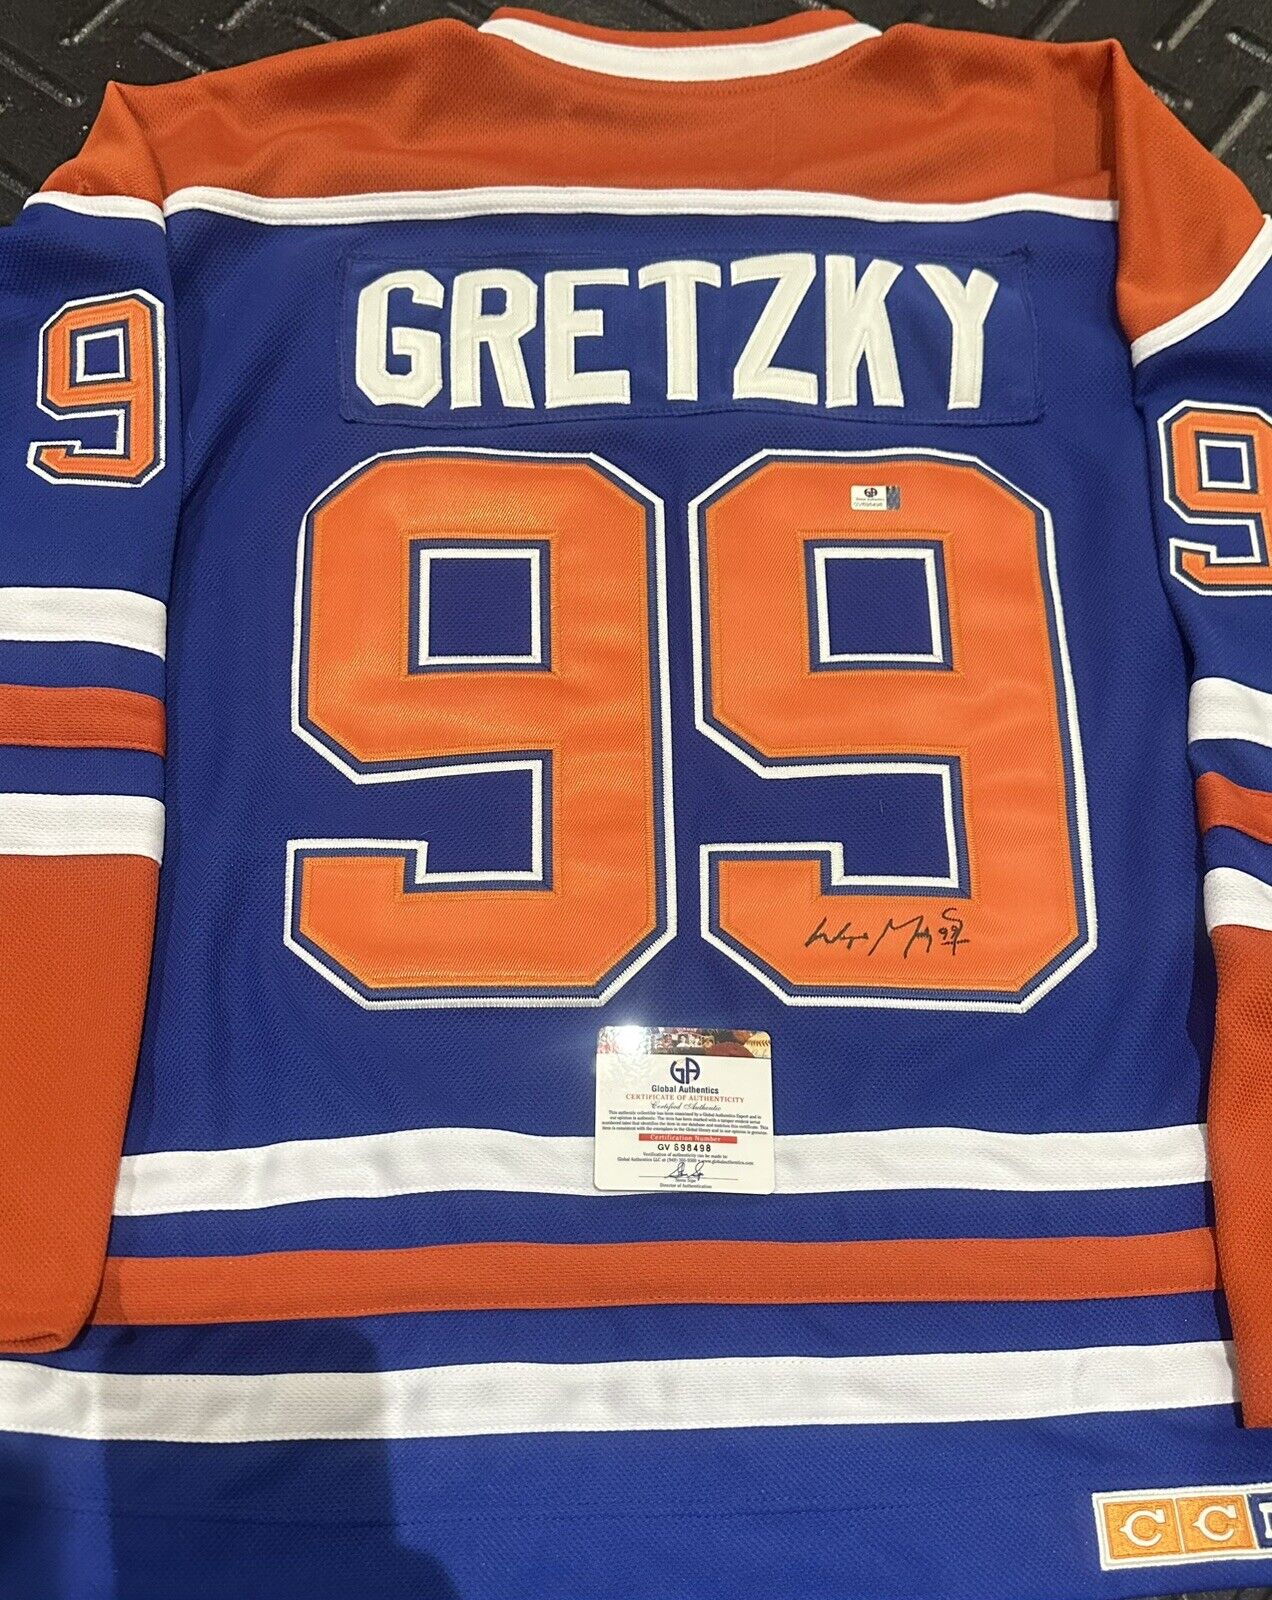 Wayne Gretzky Edmonton Oilers CCM Autographed/Signed Jersey with COA